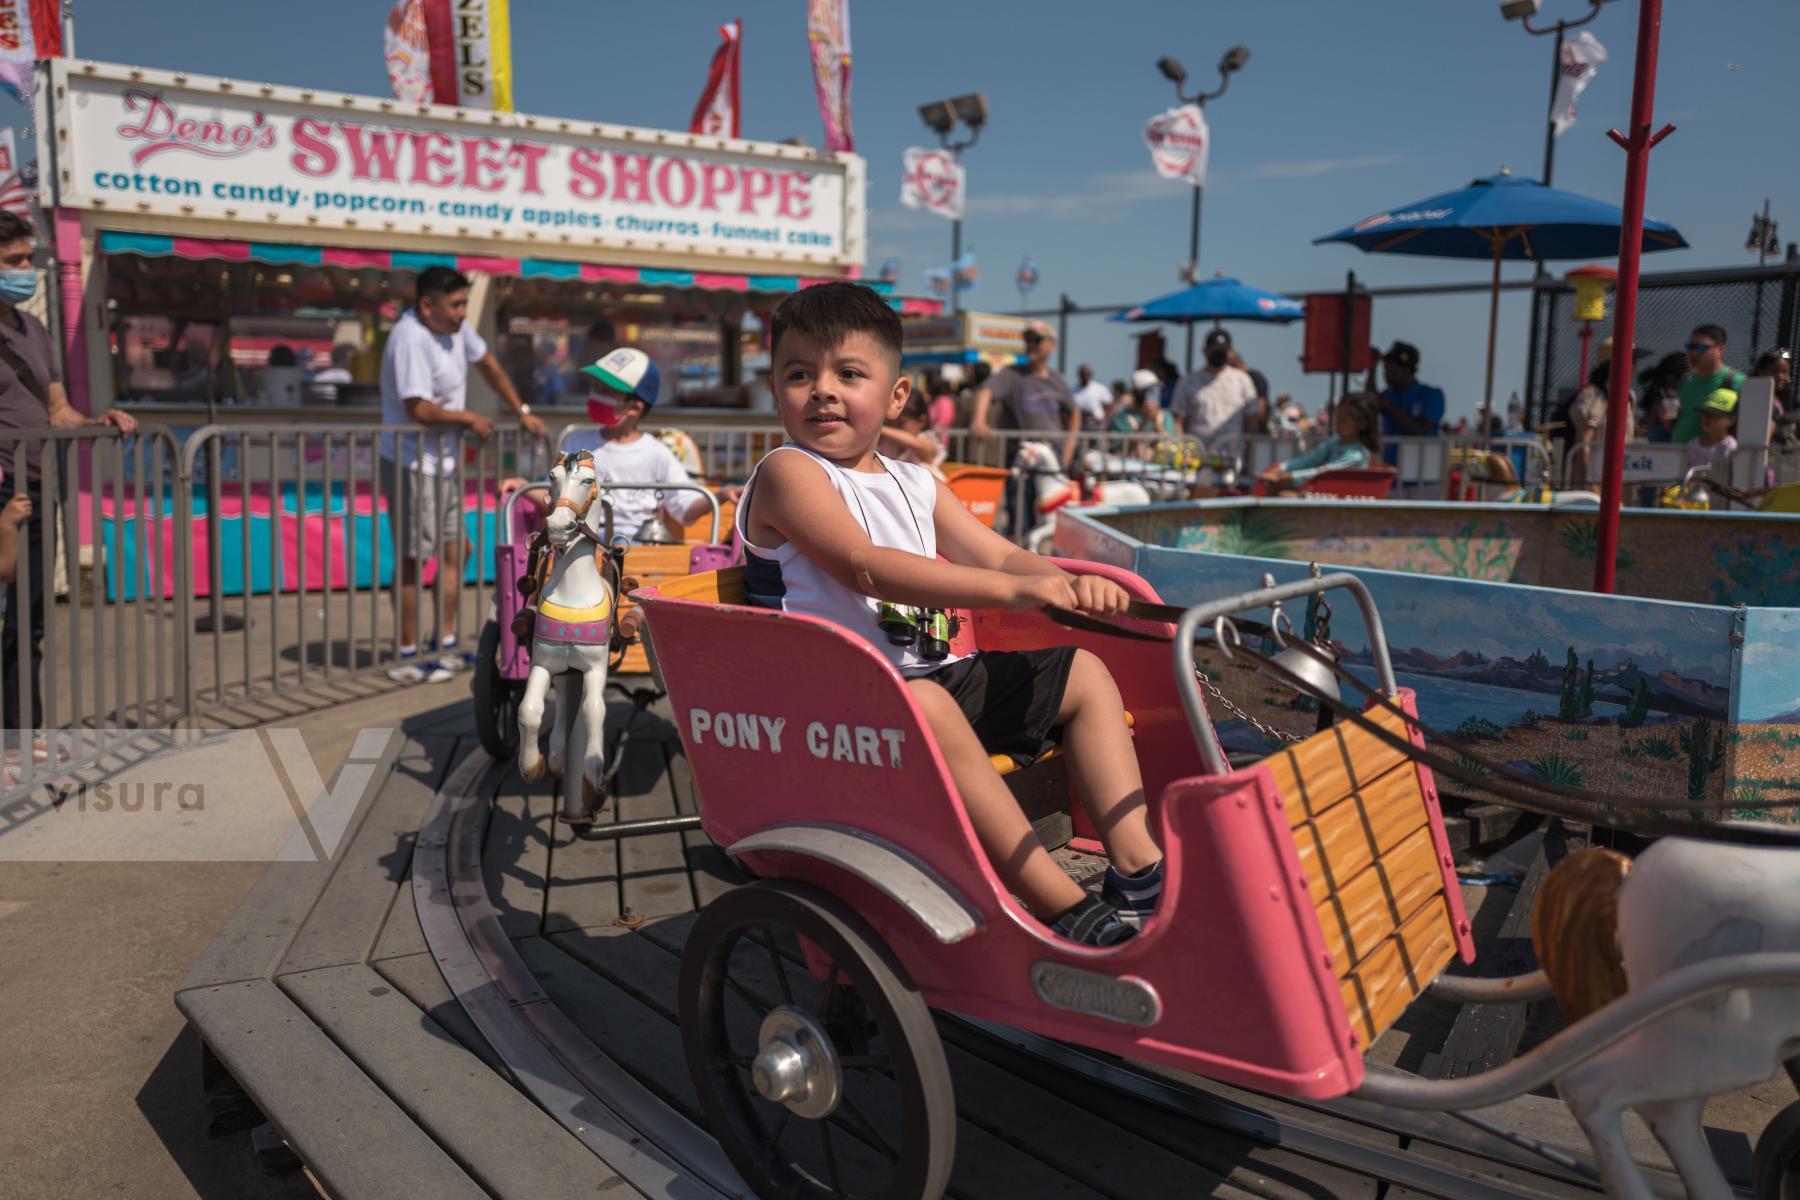 Purchase Child on Ride,Coney Island, July 2021 by Susan Rosenberg Jones